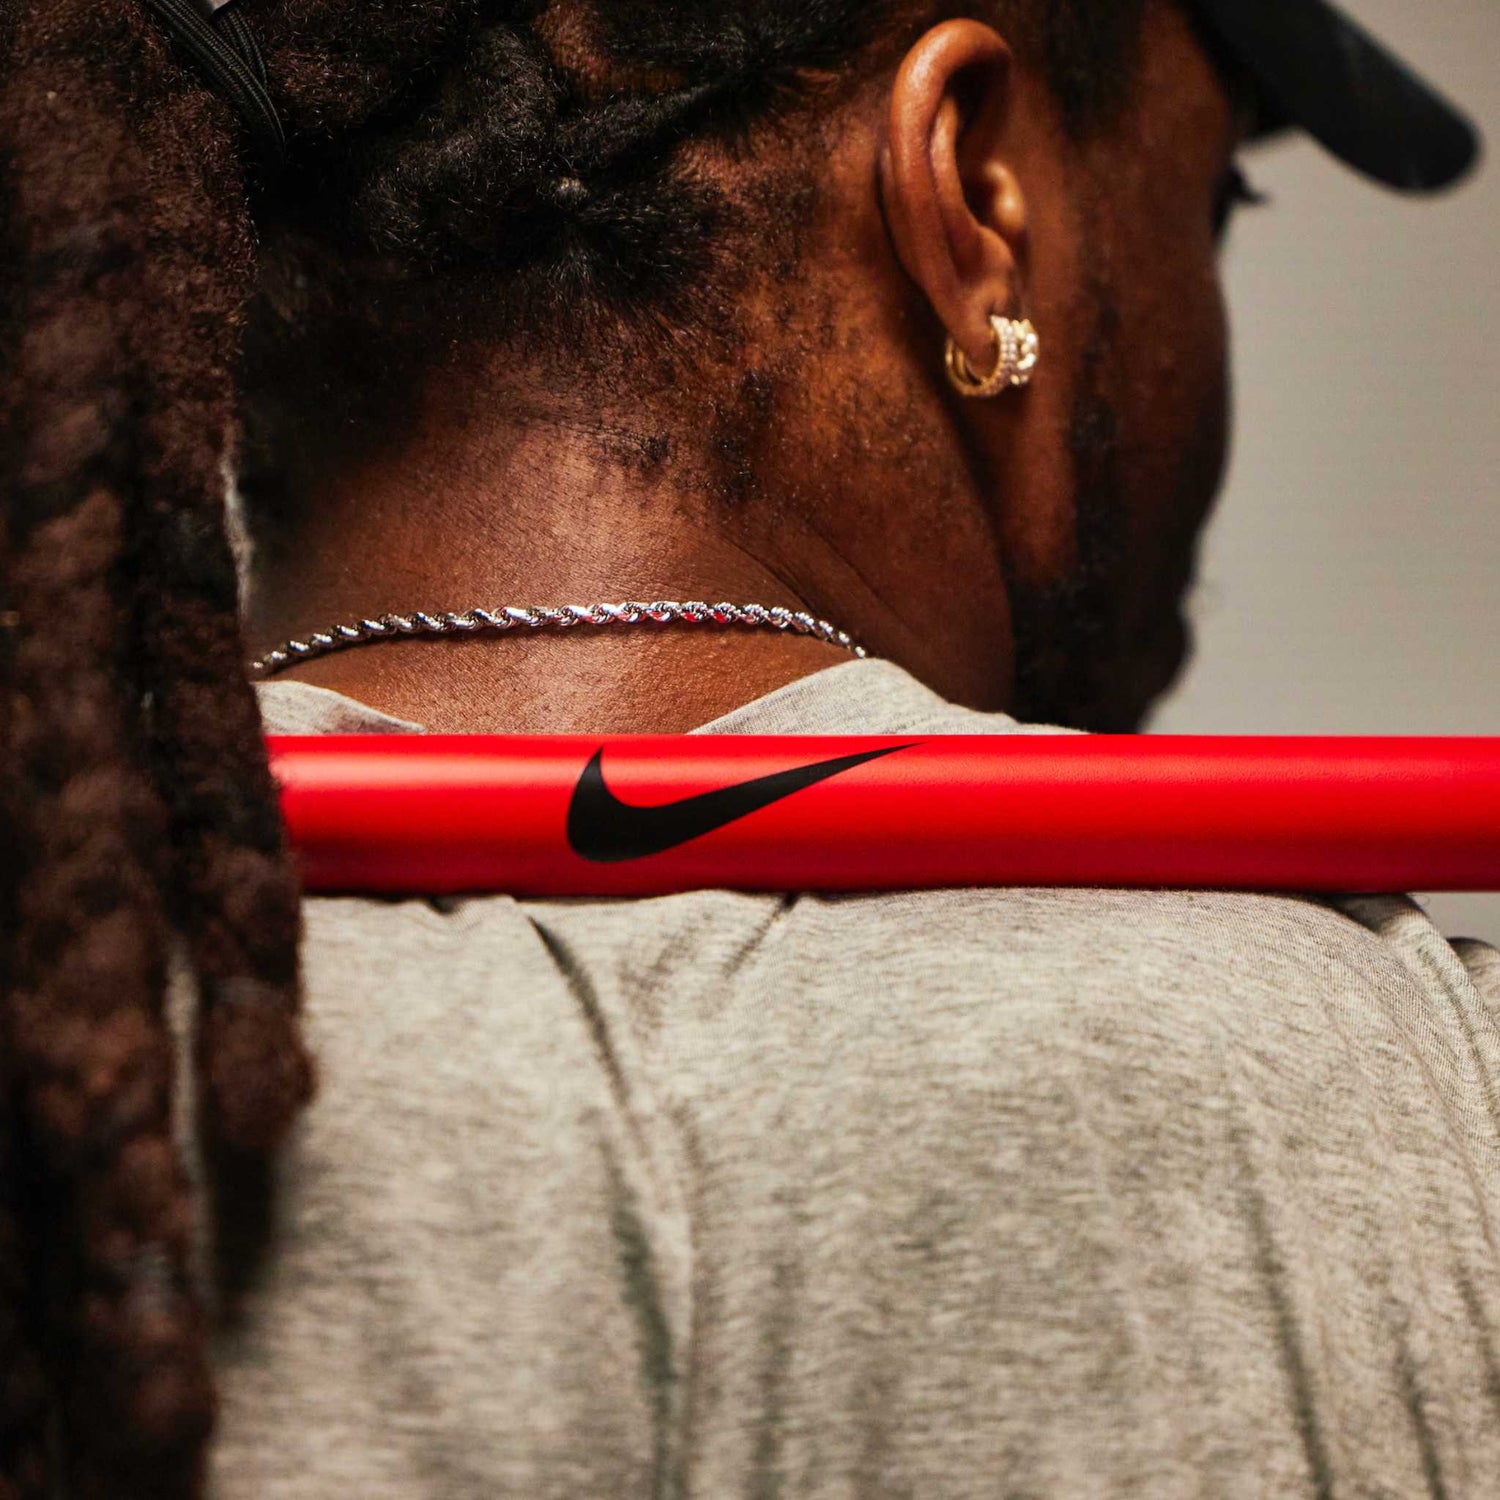 Red Swoosh Nike Coated Premium Barbell 20kg resting on Nike Athlete Derrick Henry's back before a lift